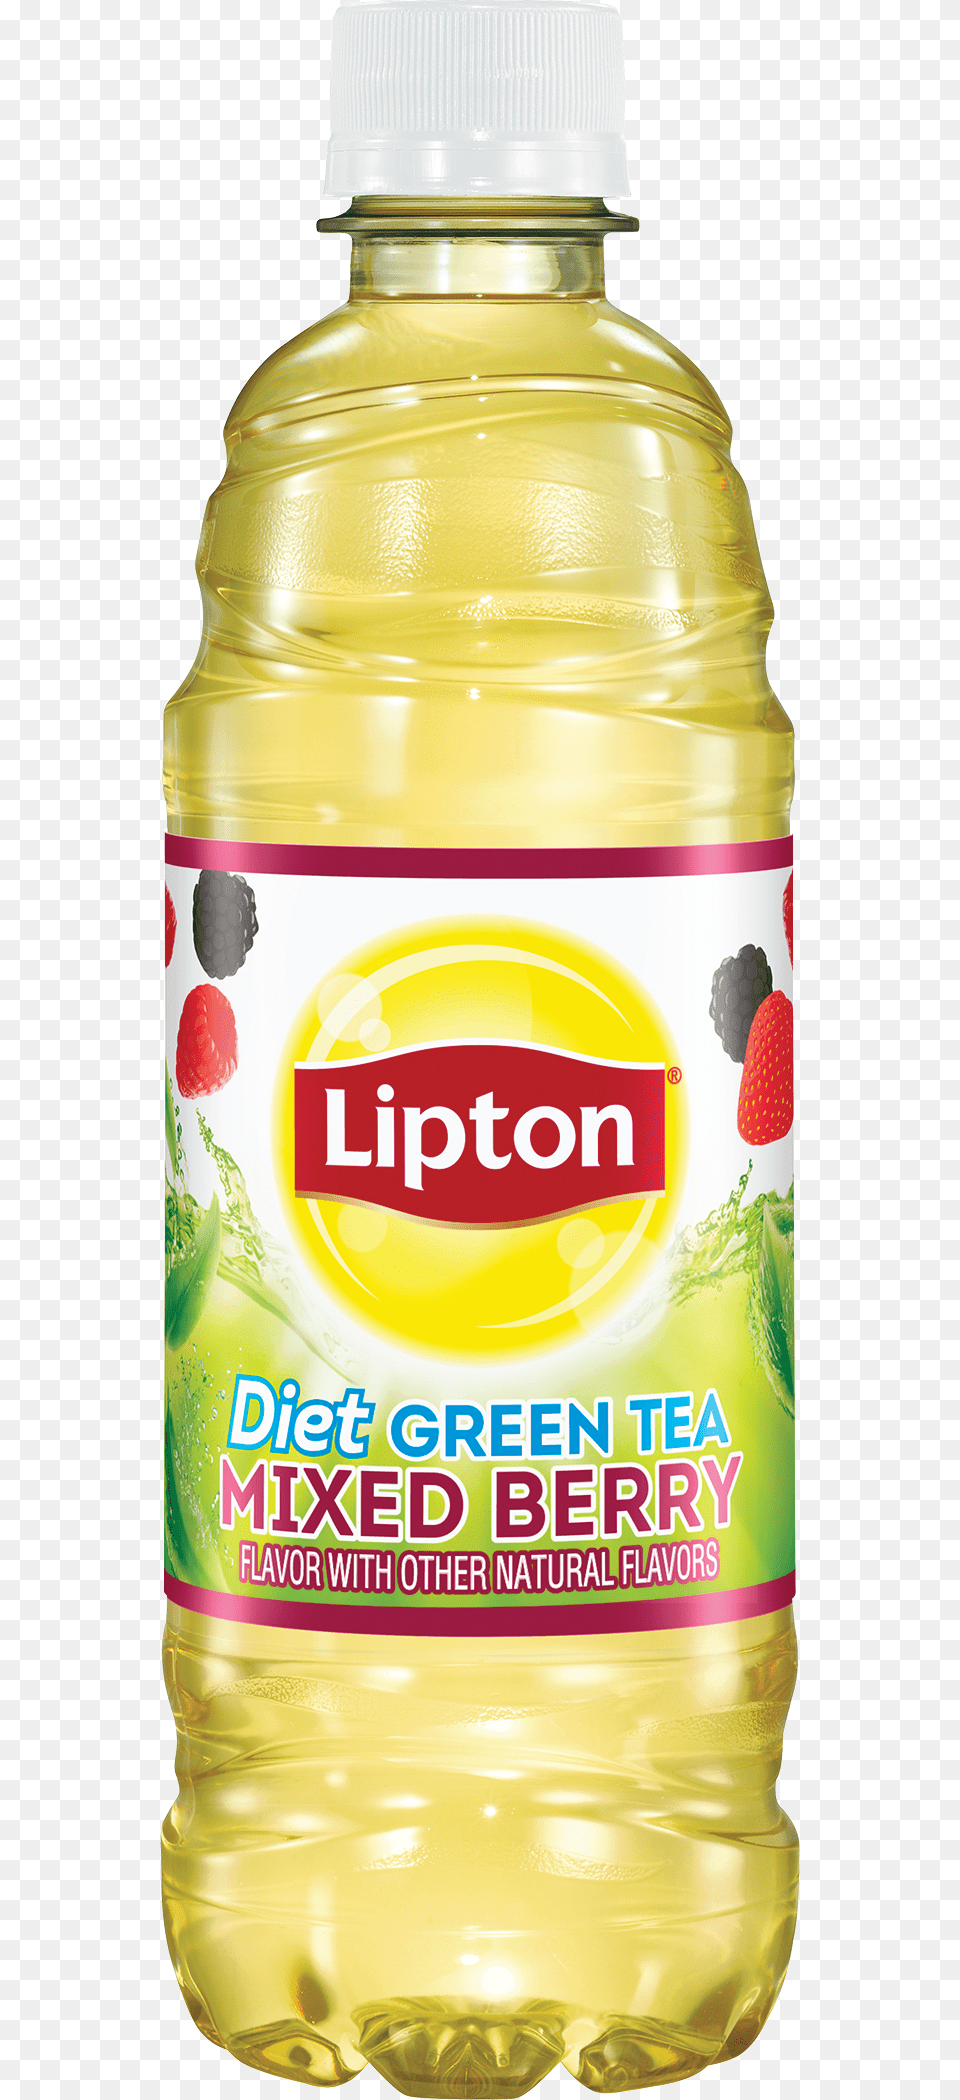 Lipton Diet Green Tea Mixed Berry, Cooking Oil, Food, Bottle, Shaker Png